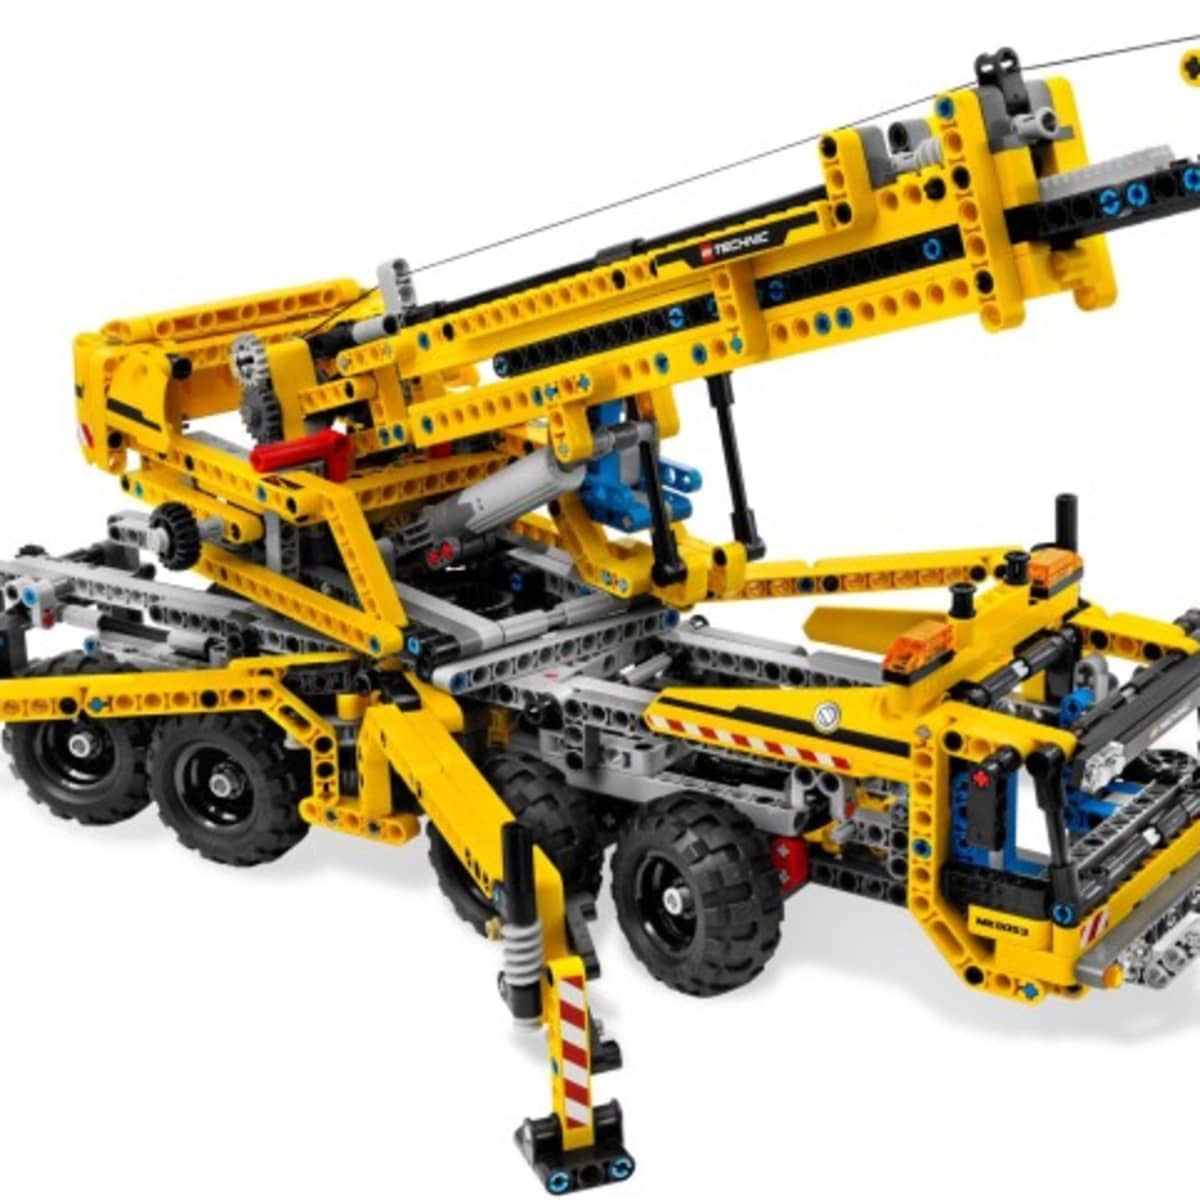 Association Stå op i stedet I fare Lego Technic: All of the Large Technic Sets of the Last Decade! - HobbyLark